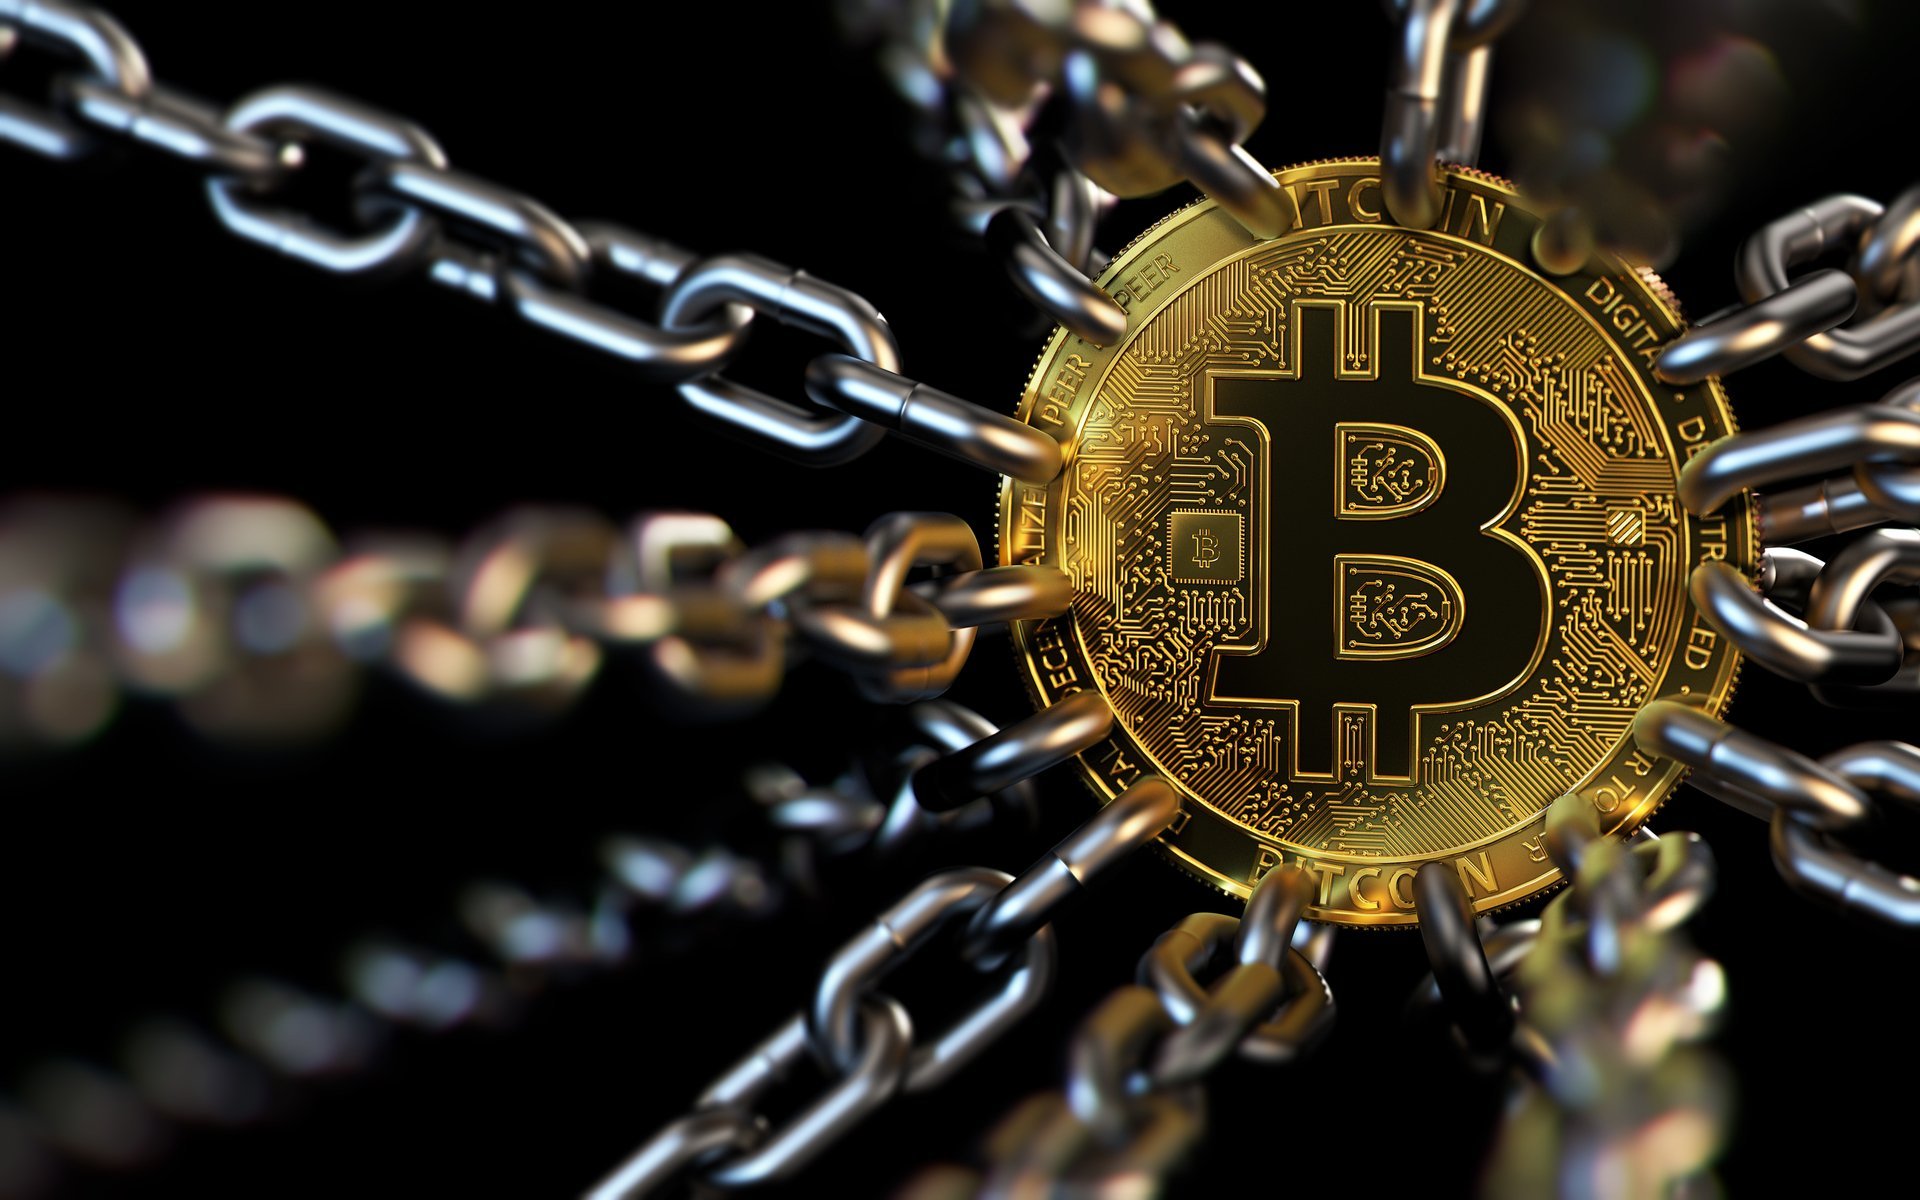  bitgrail bitcoins 2018 authorities seized june company 